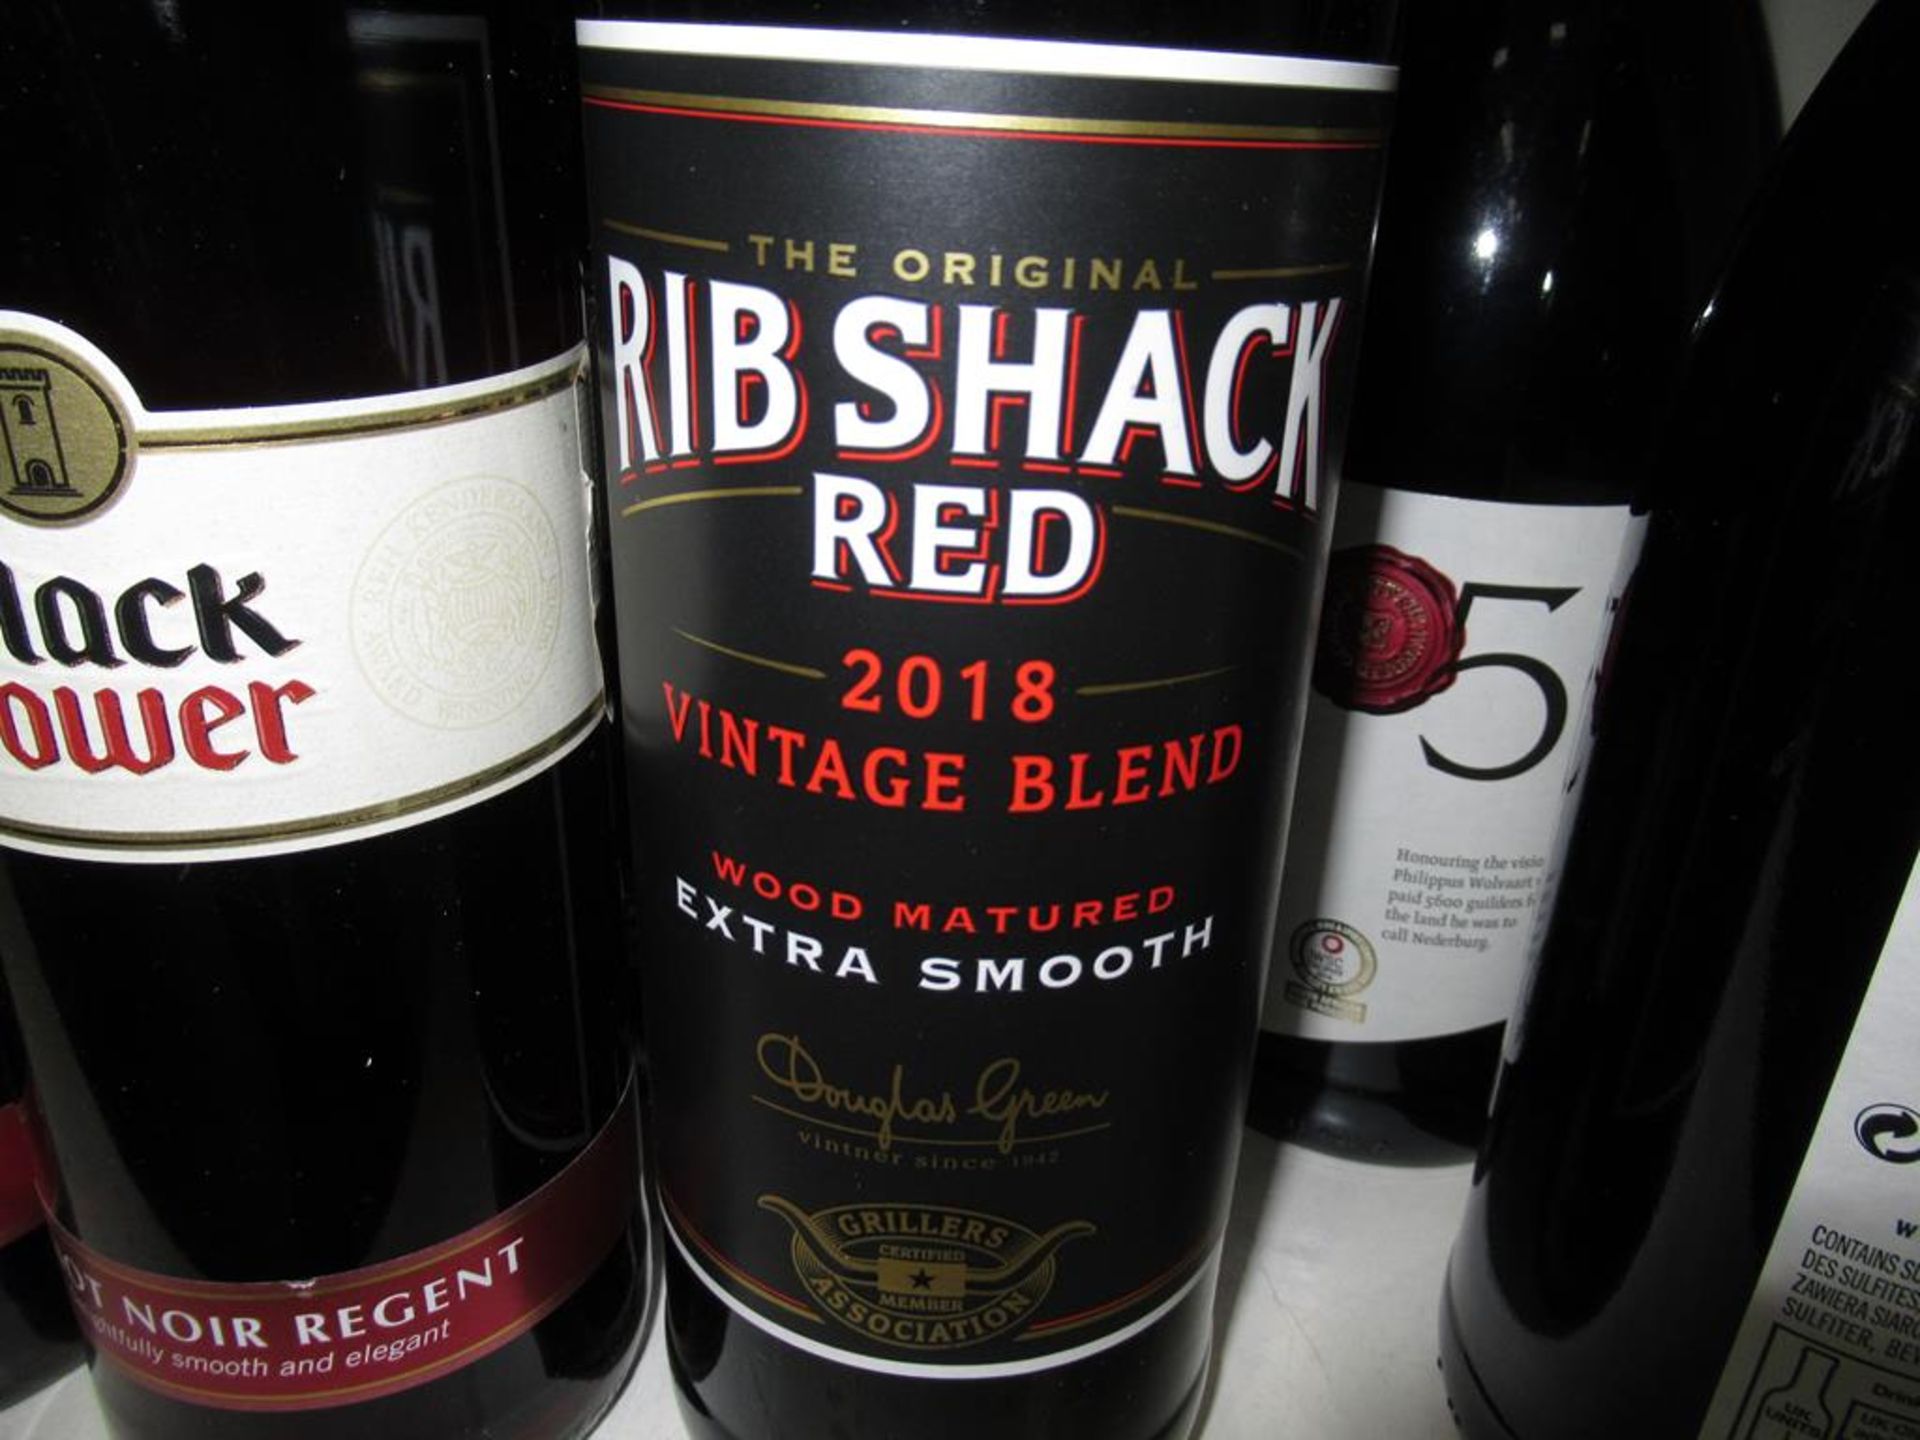 Six bottles of Black Tower Pinot Noir Regent red wine, four bottles of Black Tower smooth red wine, - Image 4 of 11